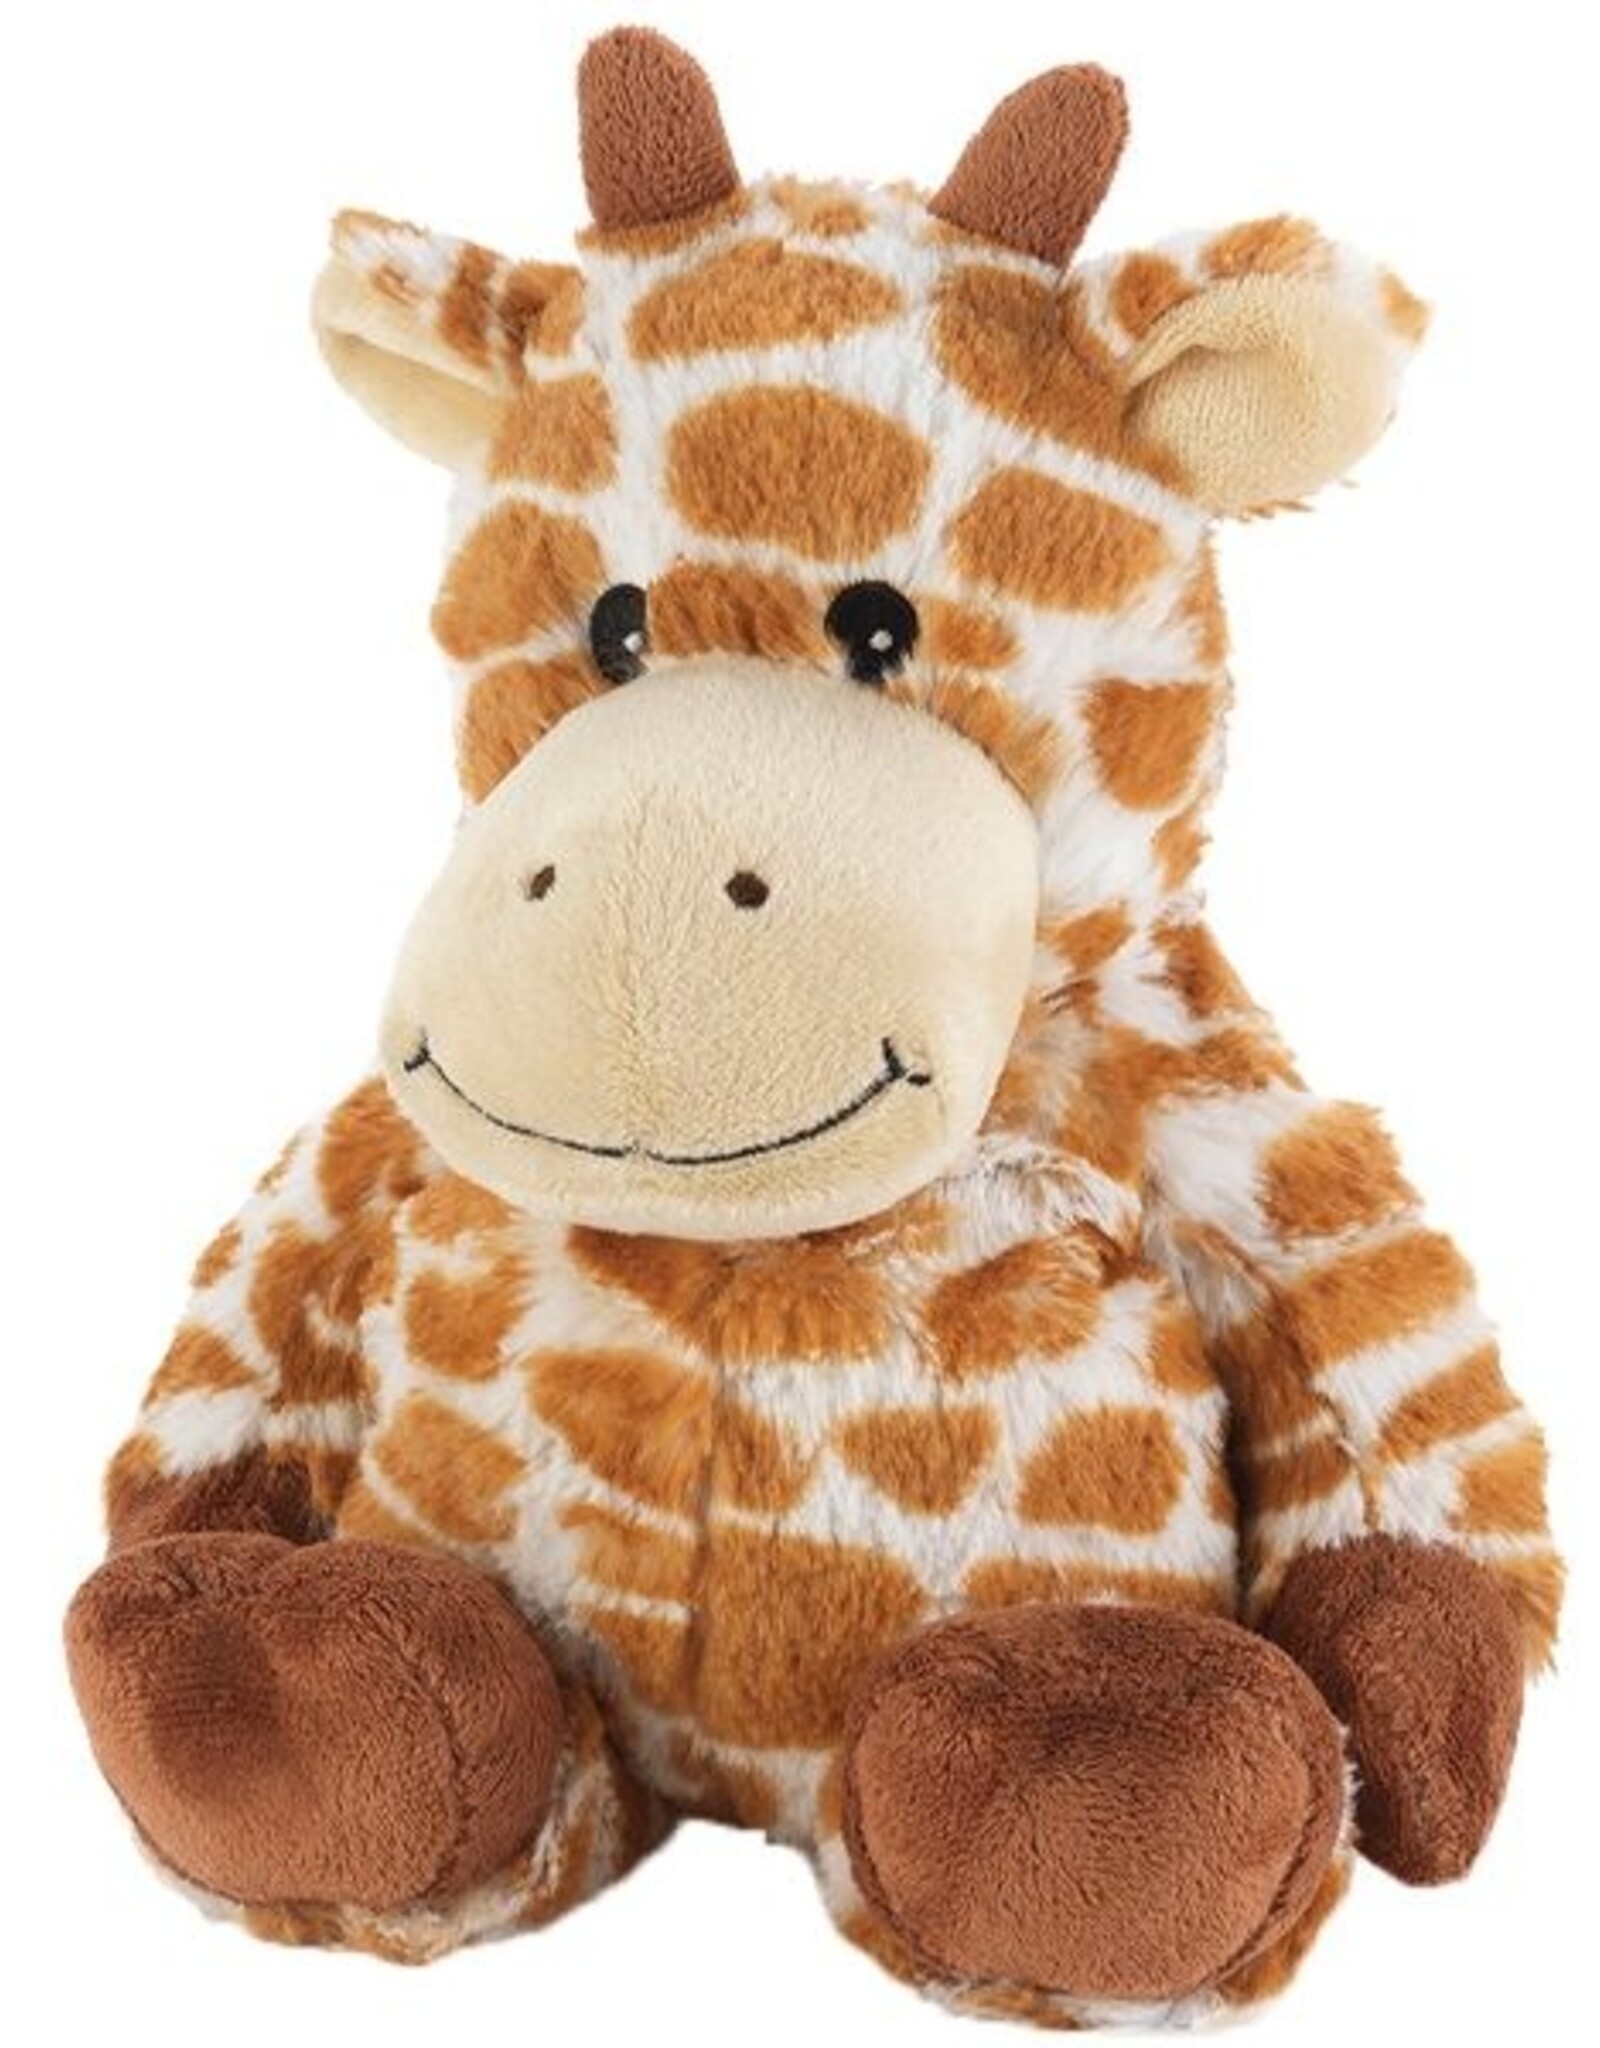 Kellis Gifts *Heatable Lavender Scented Plush Toy - Giraffe